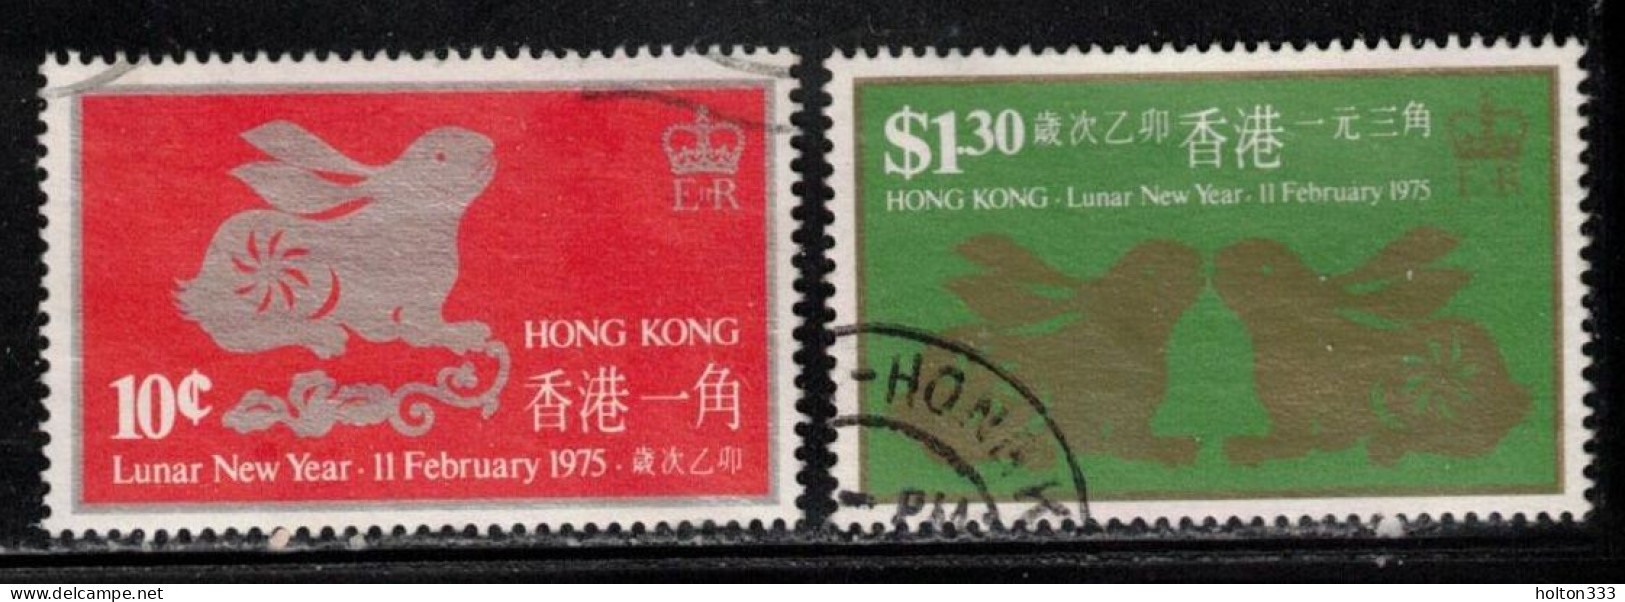 HONG KONG Scott # 302-3 Used - Lunar New Year 1975 - Usados